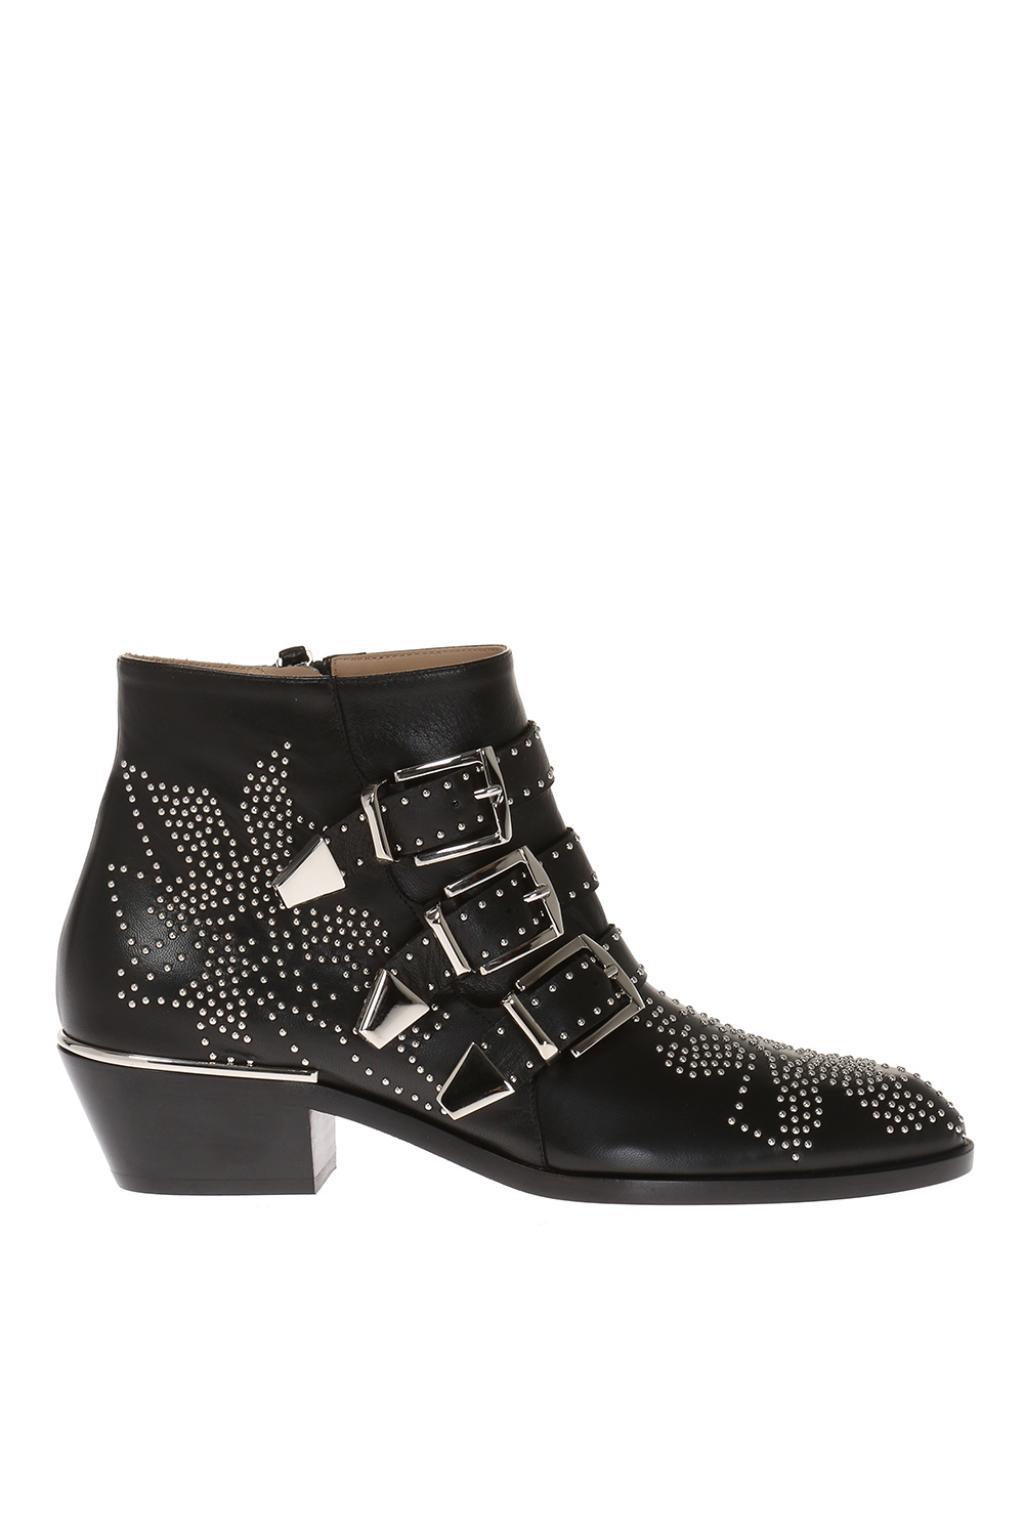 Chloé Susanna Black Leather Ankle Boots - Save 76% - Lyst